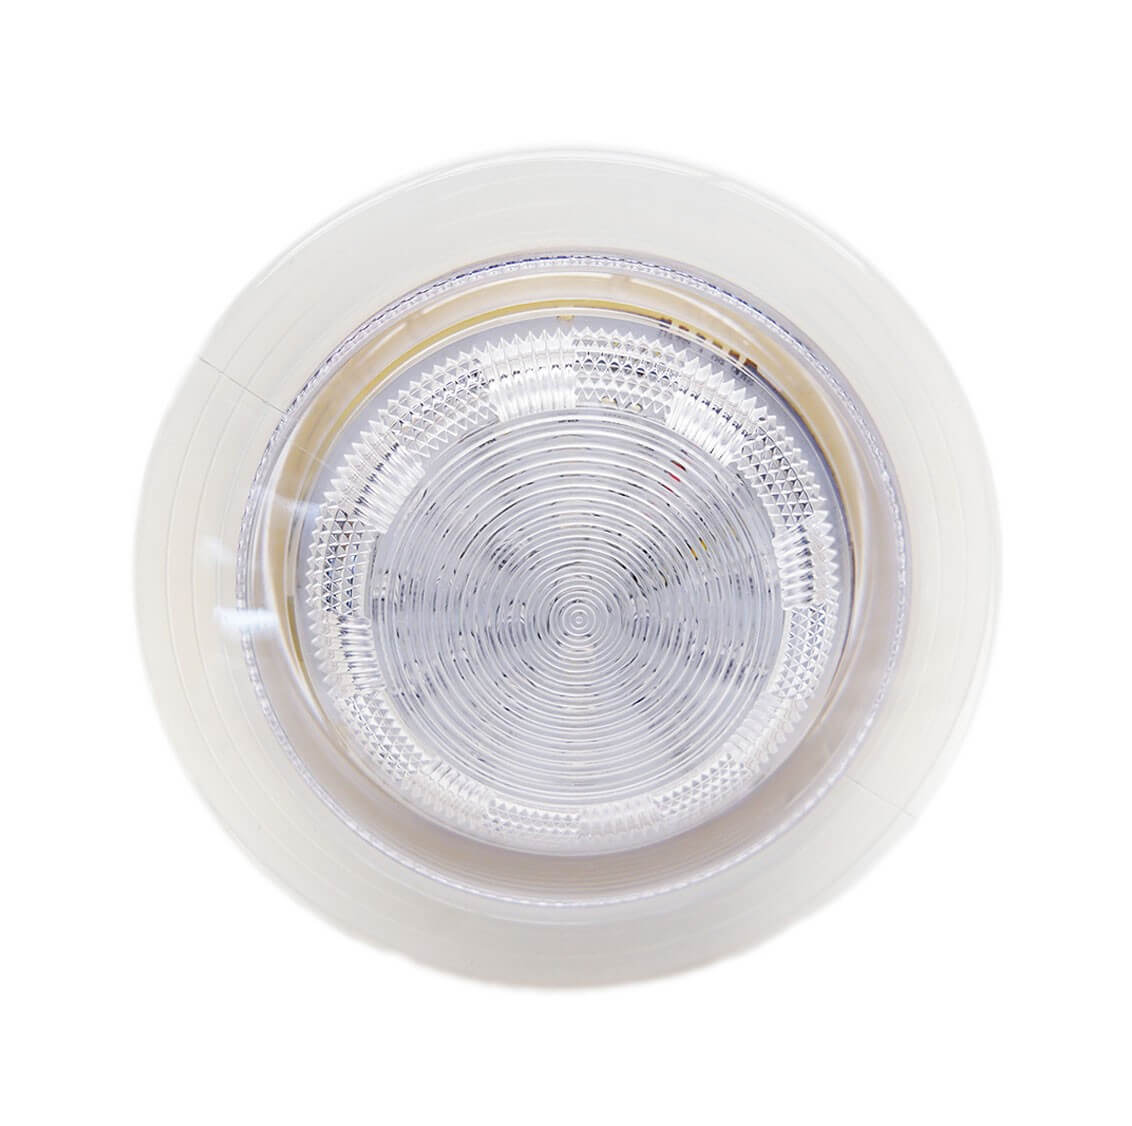 Acheter spot LED pour piscine blanc froid IP68